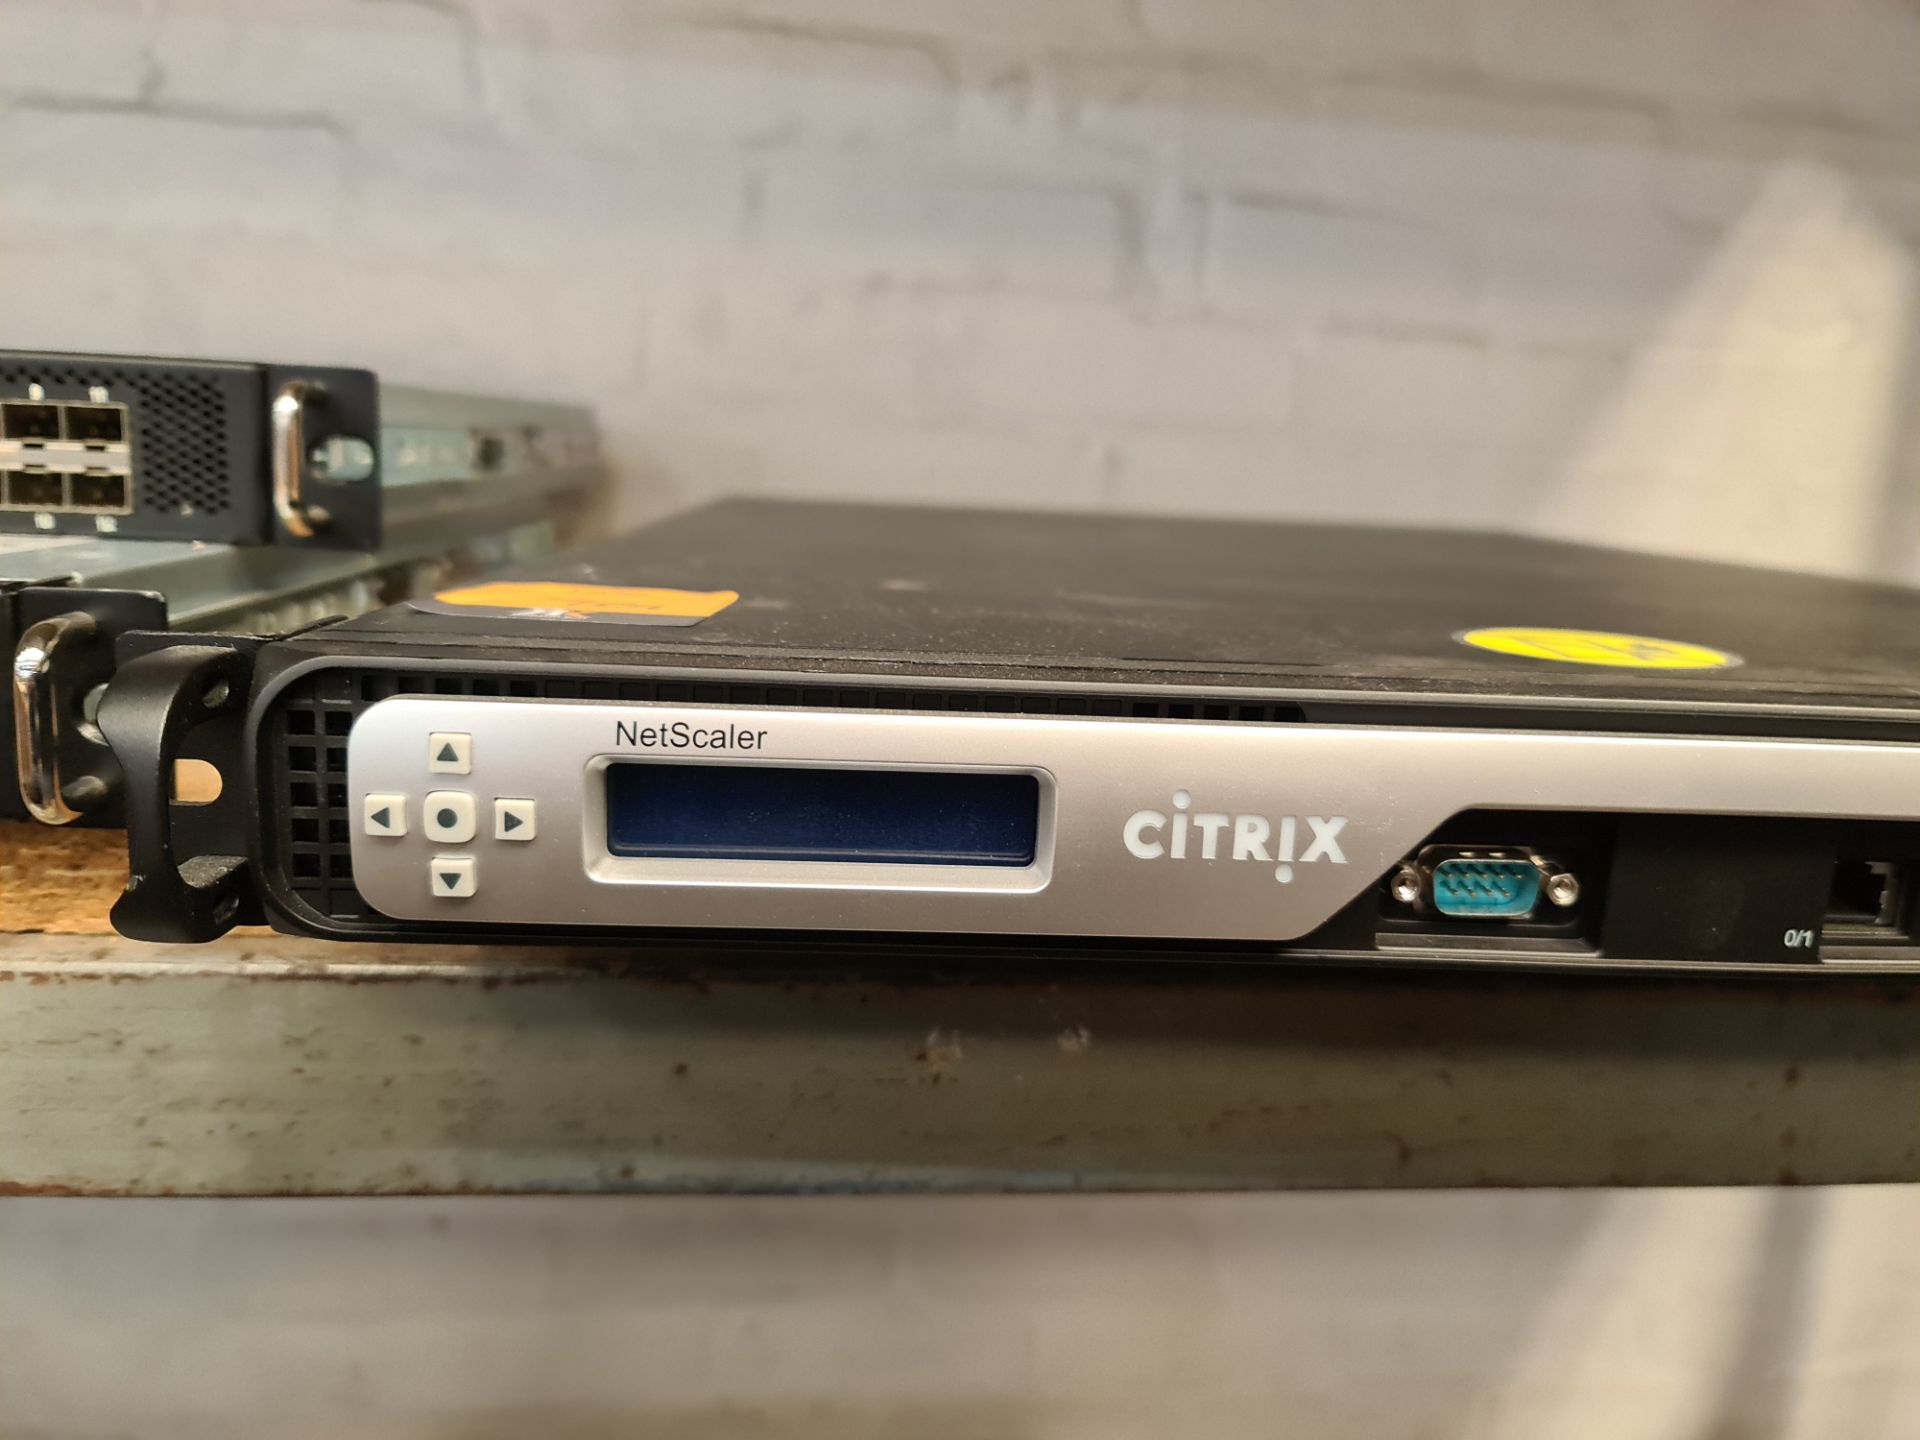 Citrix NetScaler model NS 6xCu 8-port gigabit Ethernet load balancer - Image 3 of 7